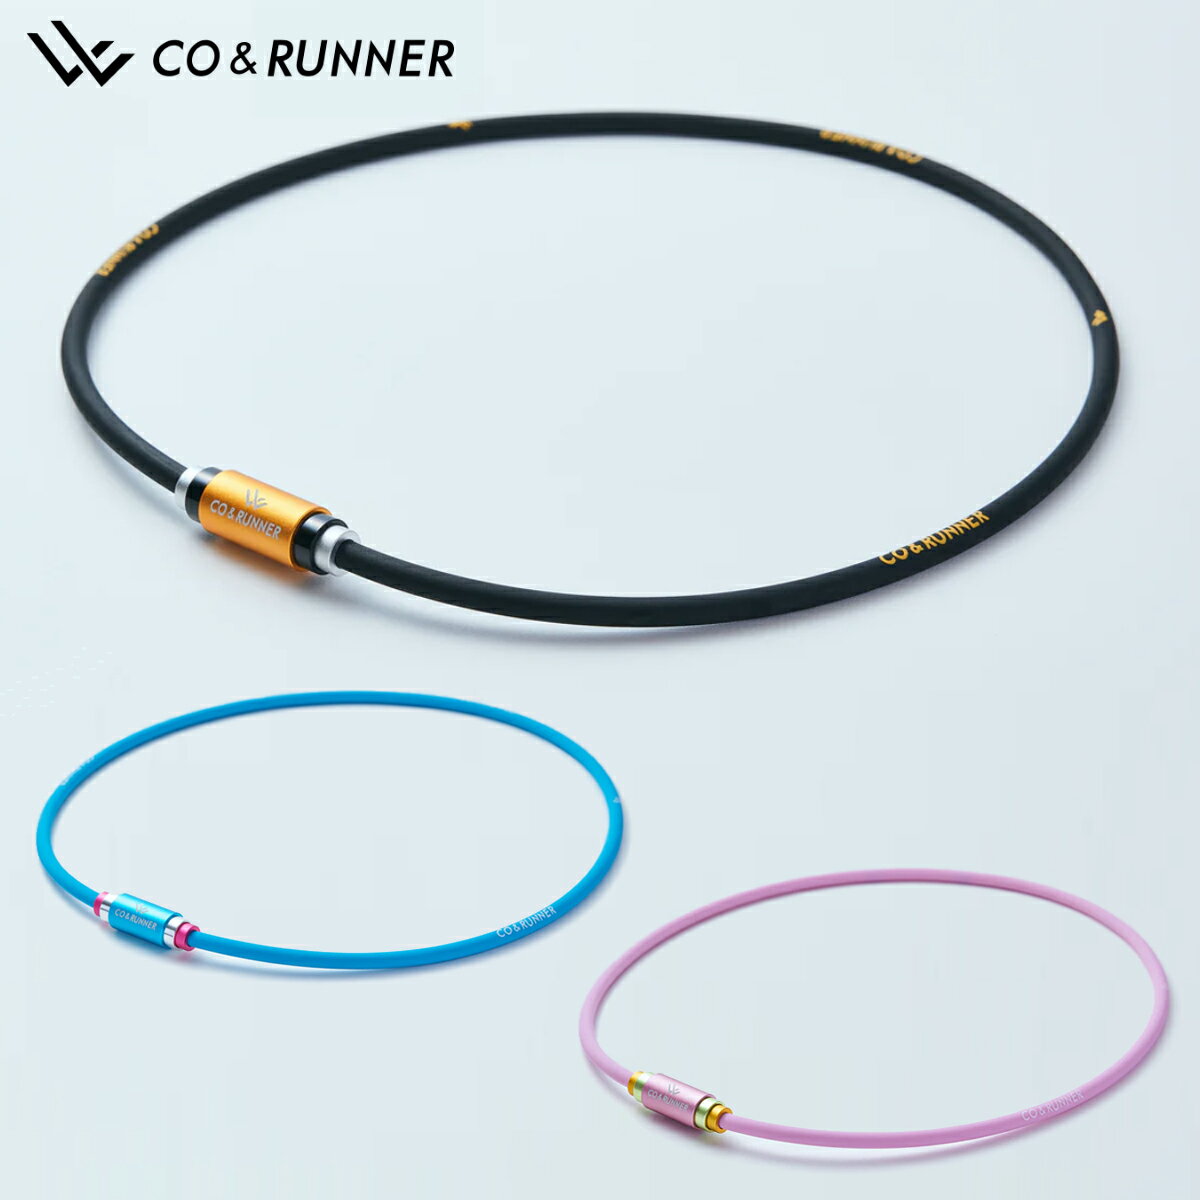 CO&RUNNER コランナー 正規品 男女兼用 スポーツ 家庭用 磁気ネックレス 【あす楽対応】